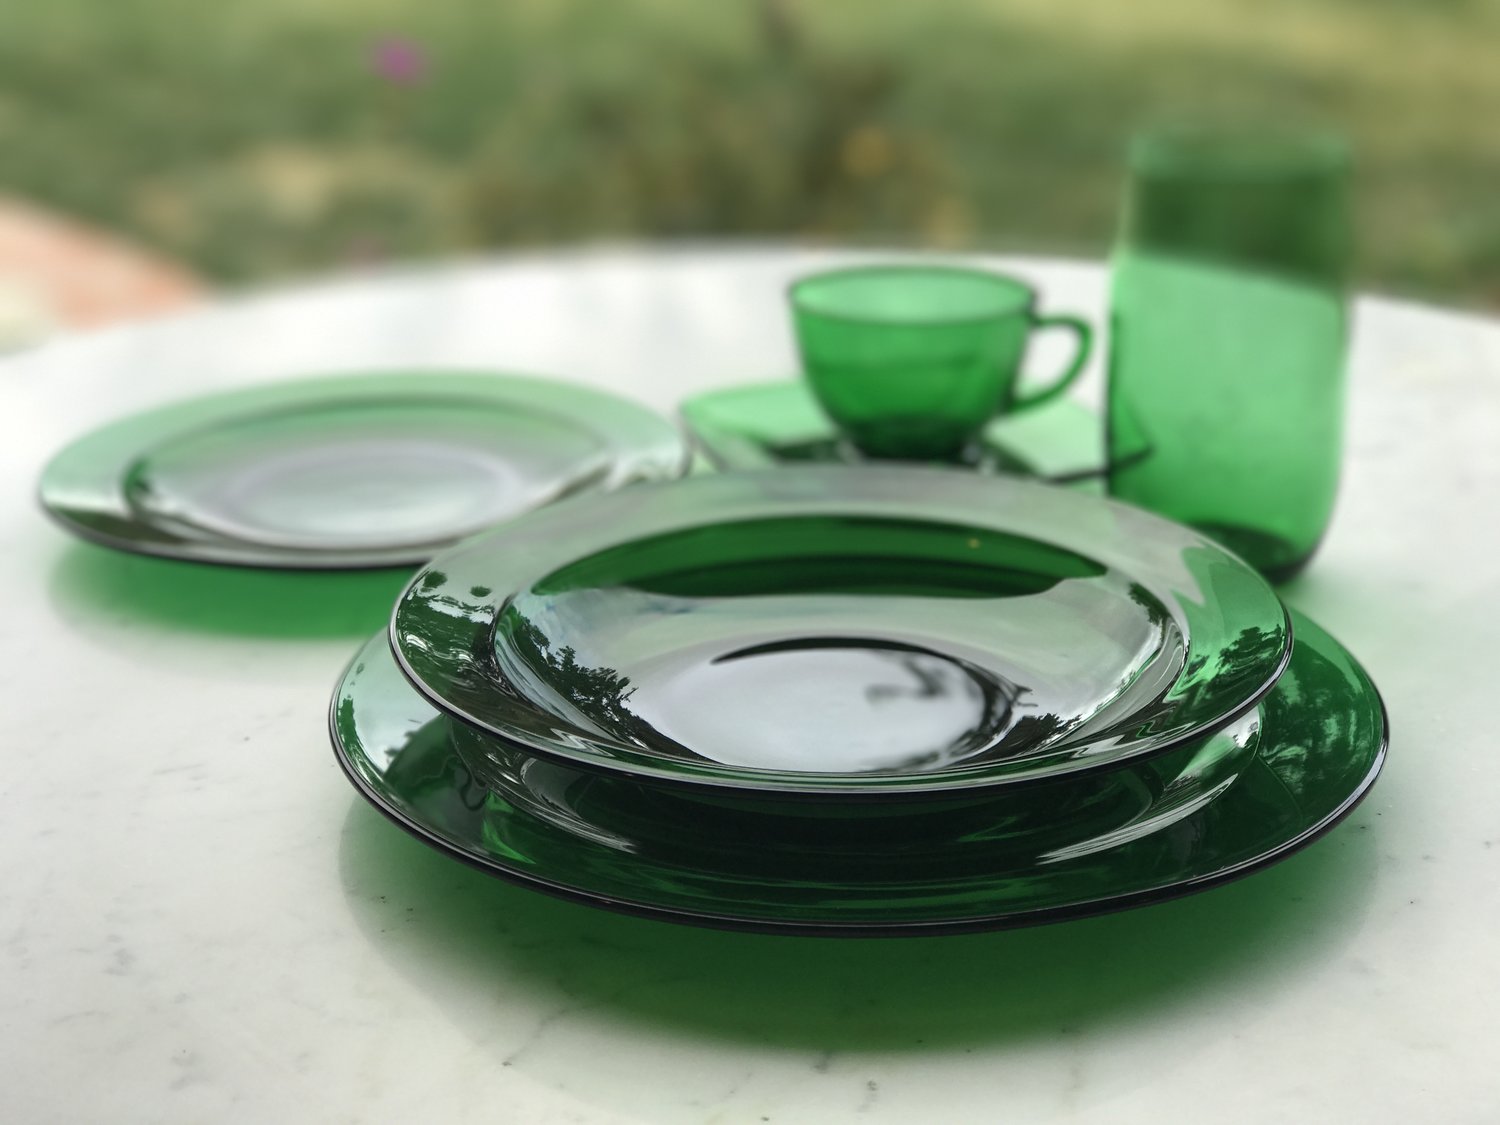 Glass Dinnerware Rental, Glass Dinner Plates & Bowls